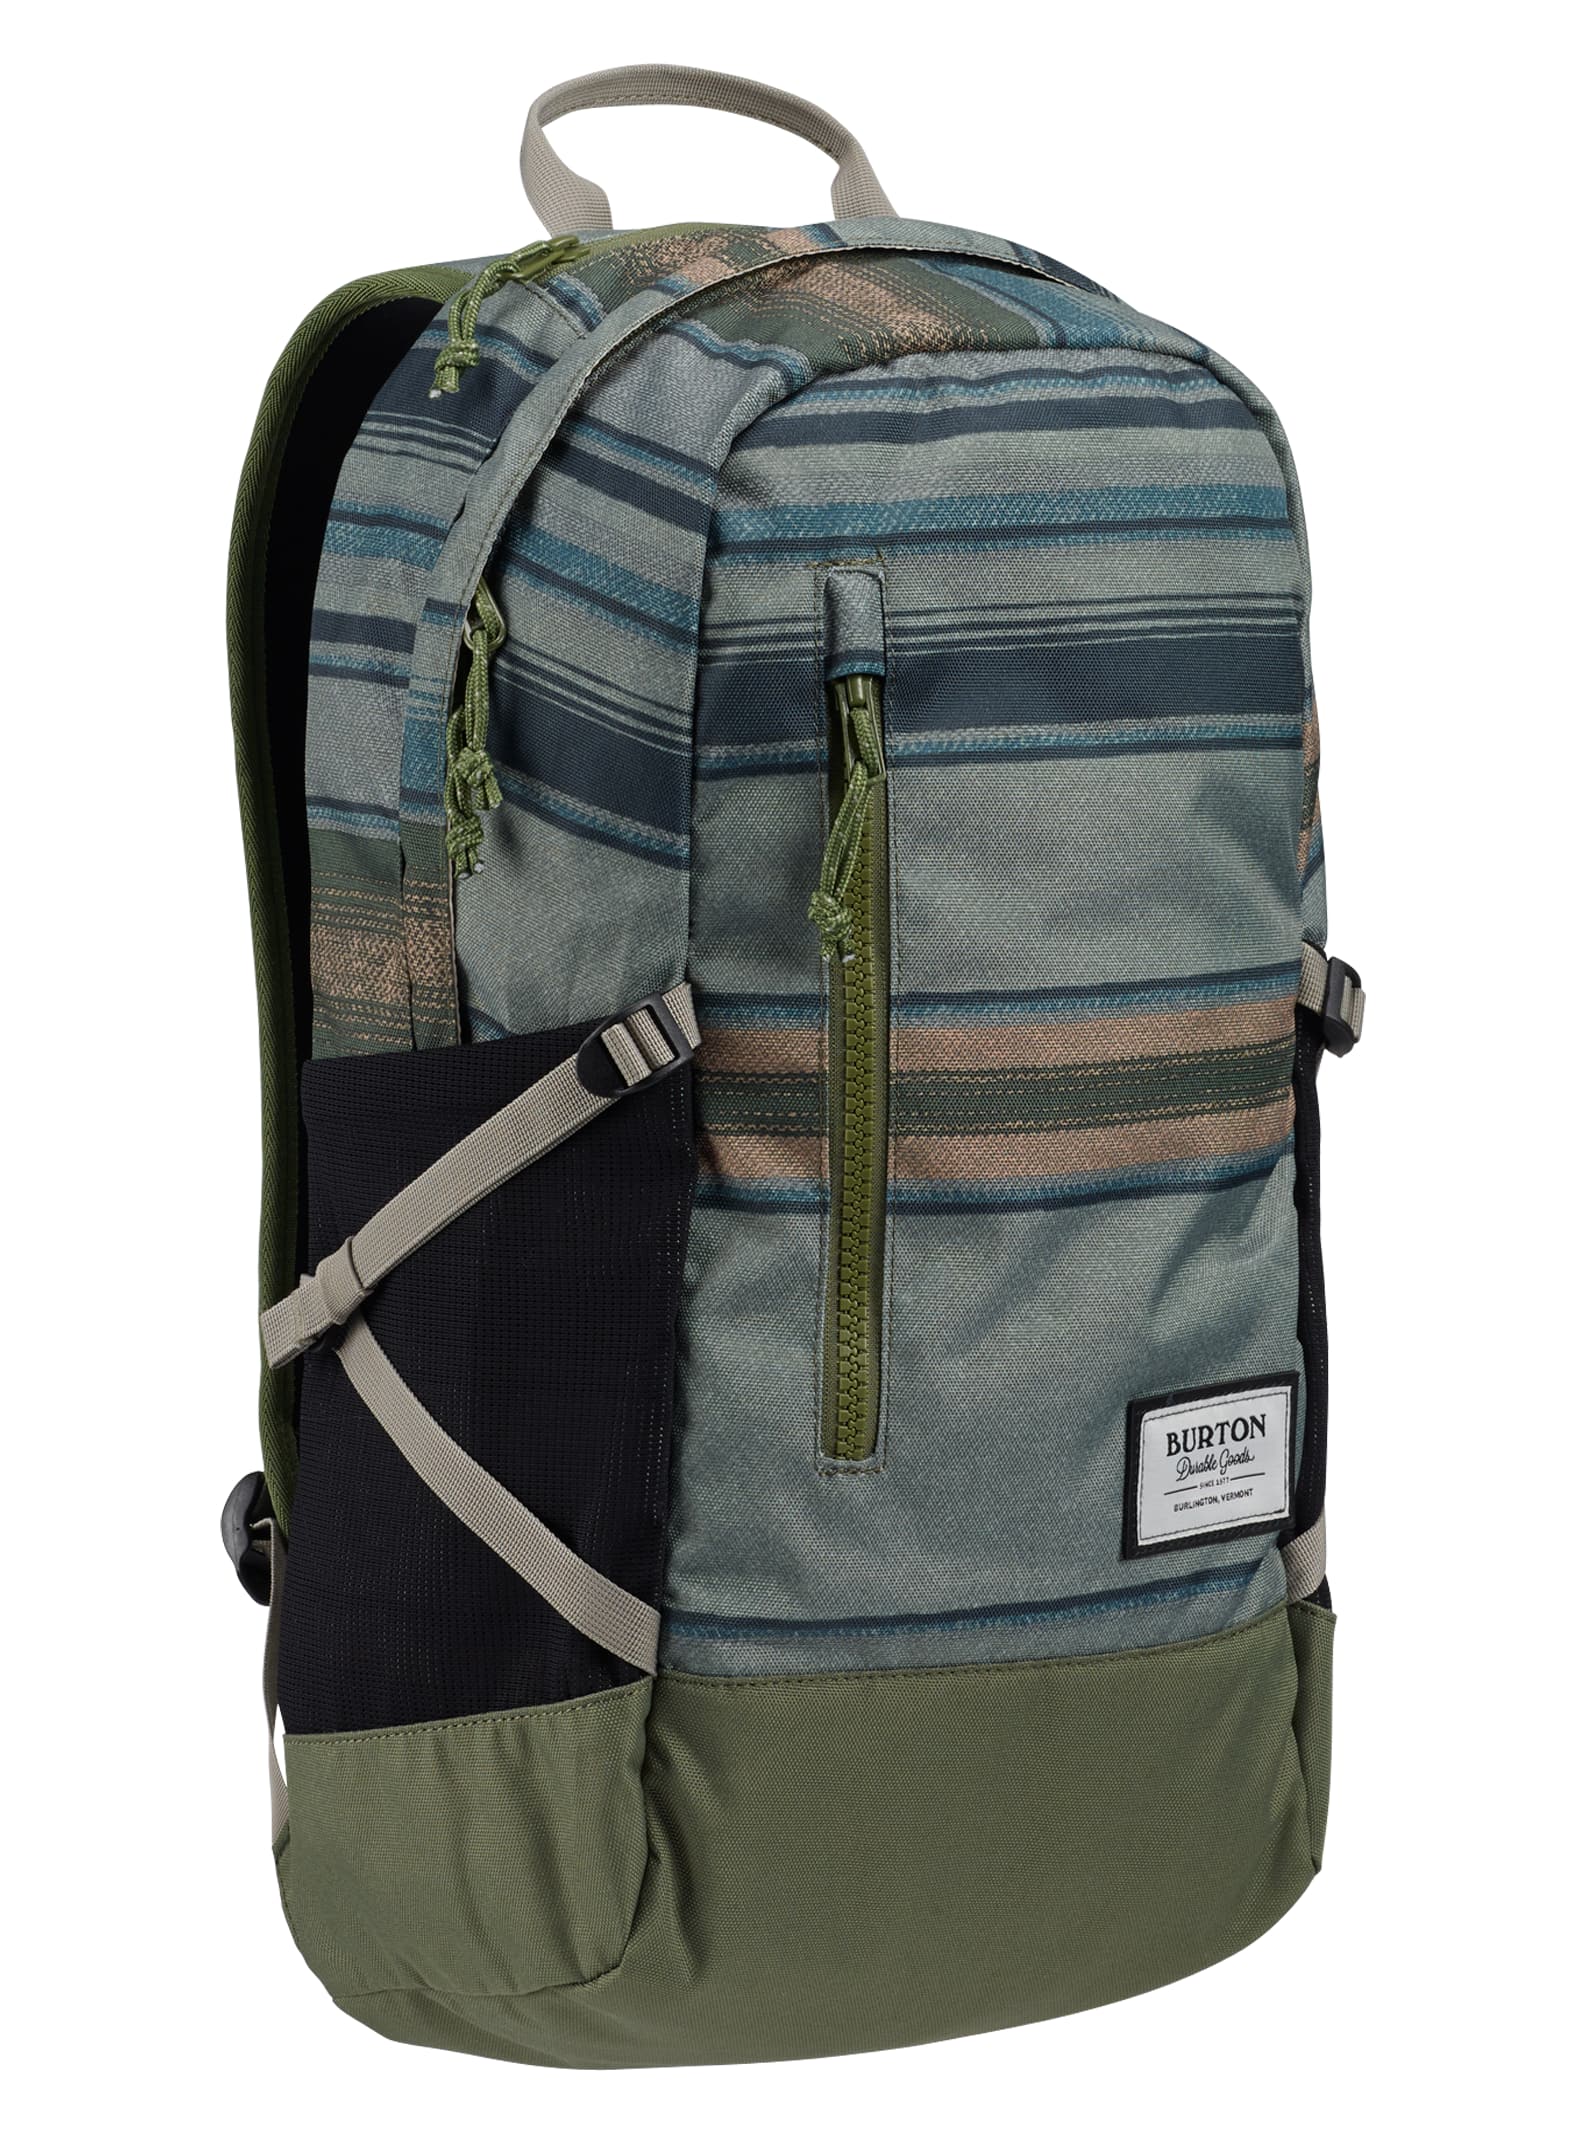 Burton Prospect Backpack | Burton.com Fall 2019 US